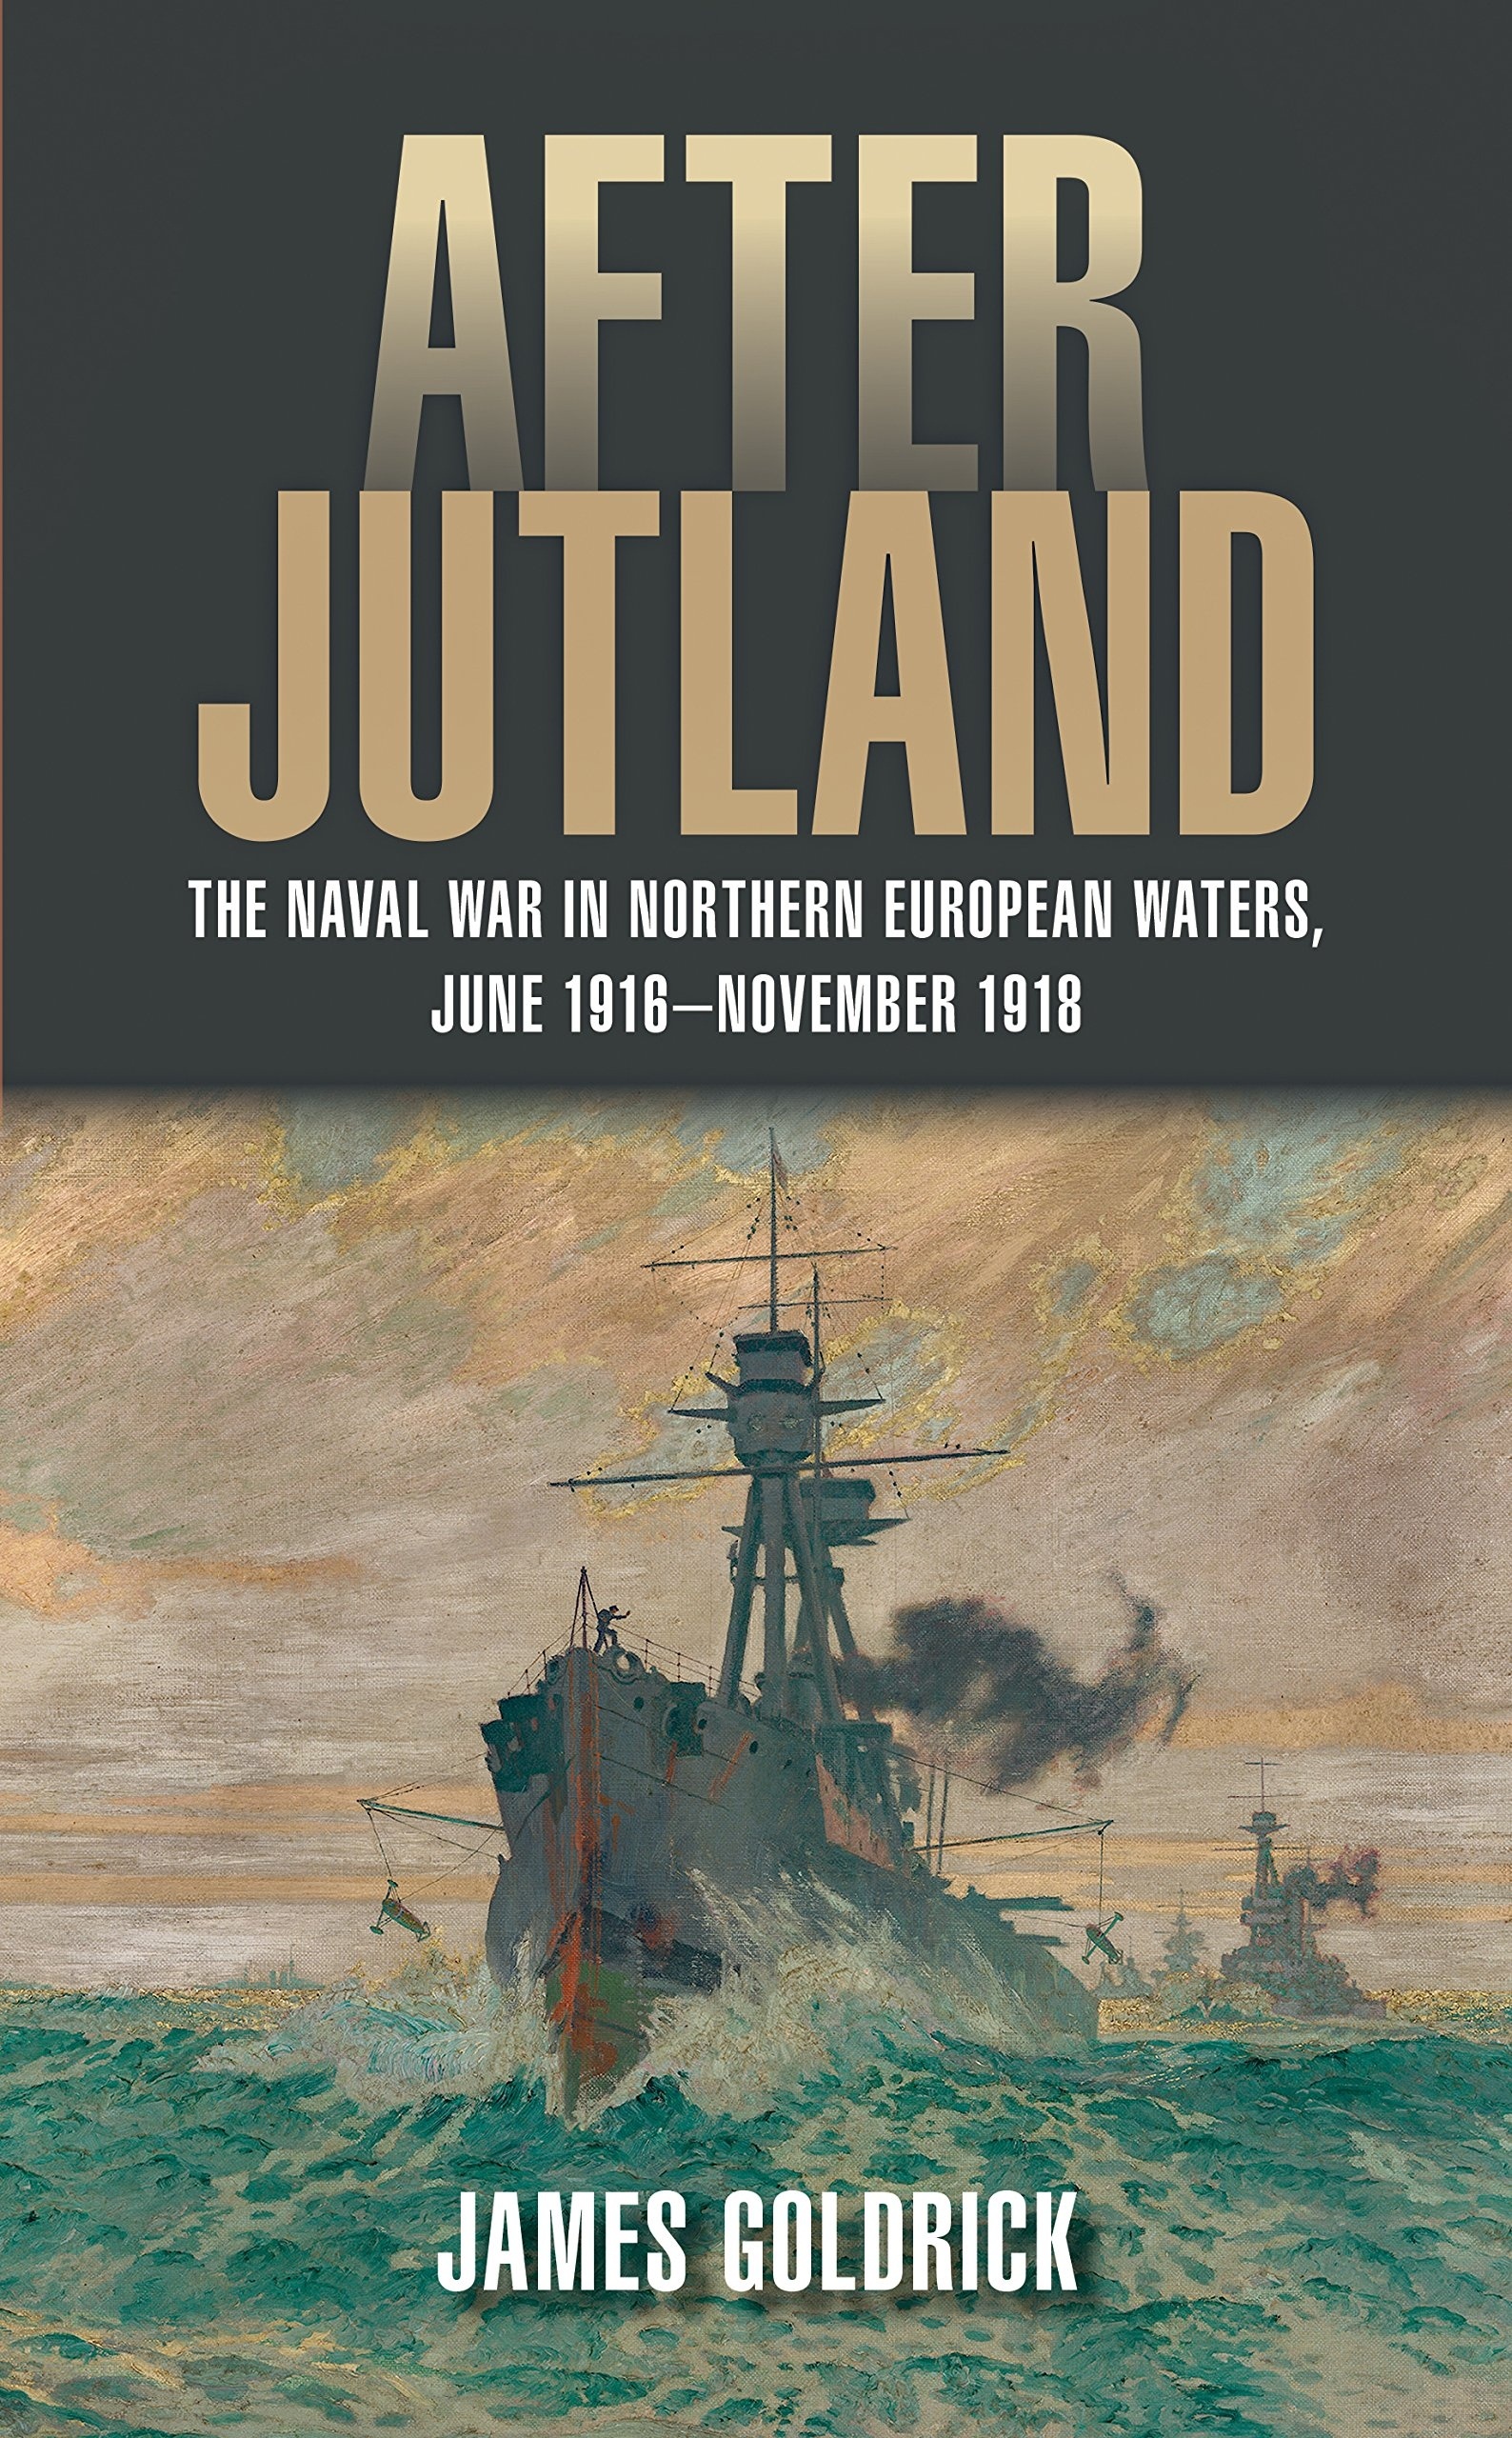 After Jutland "The Naval War in North European Waters, June 1916-November 1918"